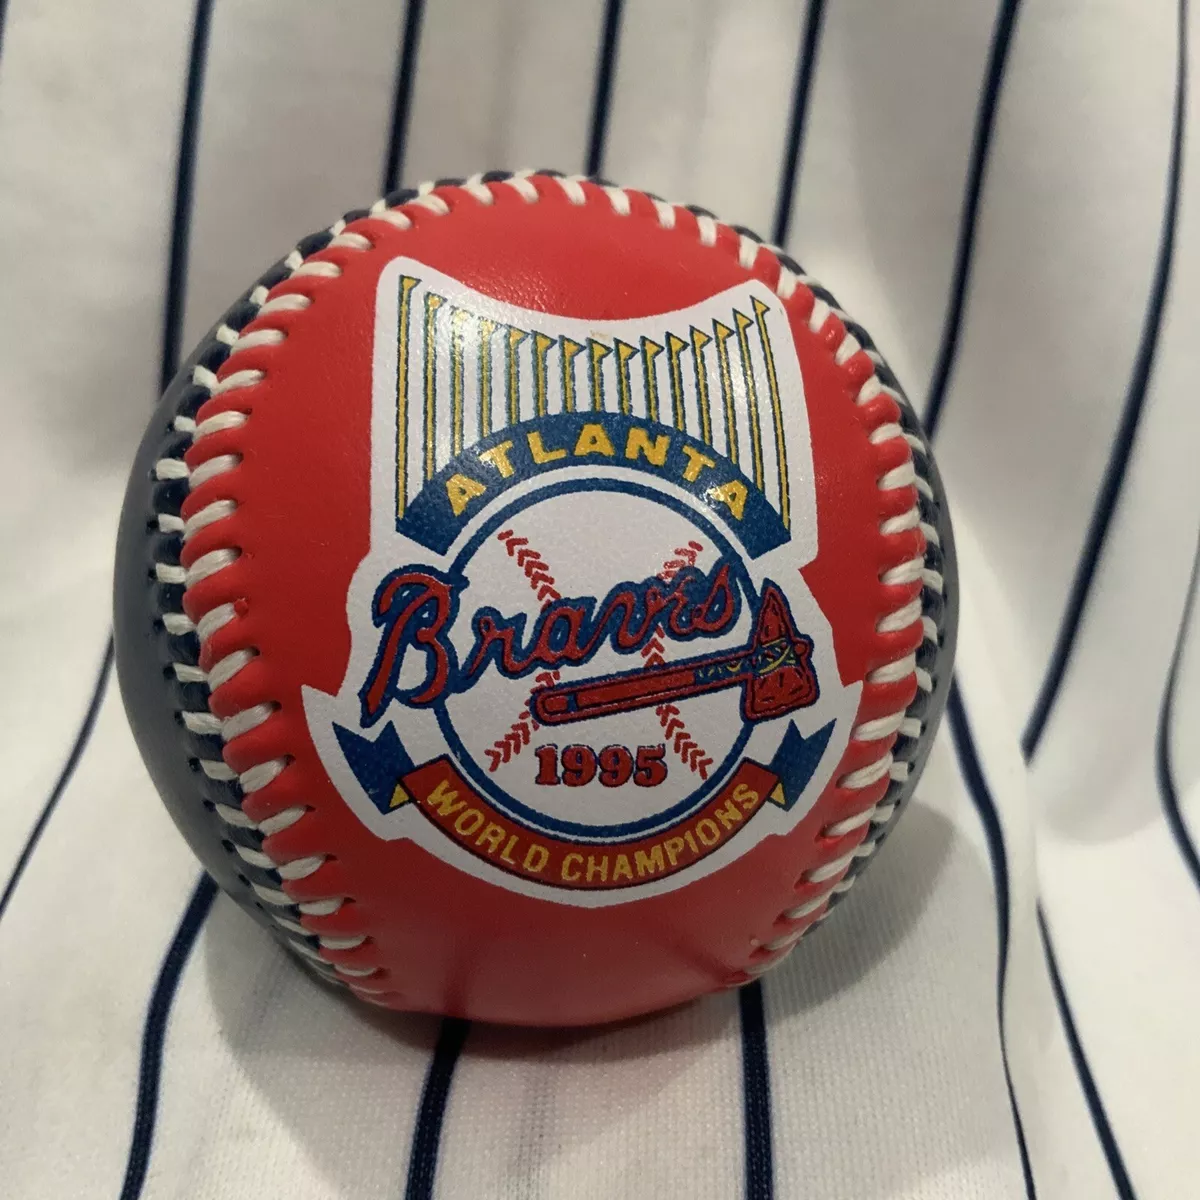 Atlanta Braves 1995 World Champions Burger King Souvenir baseball